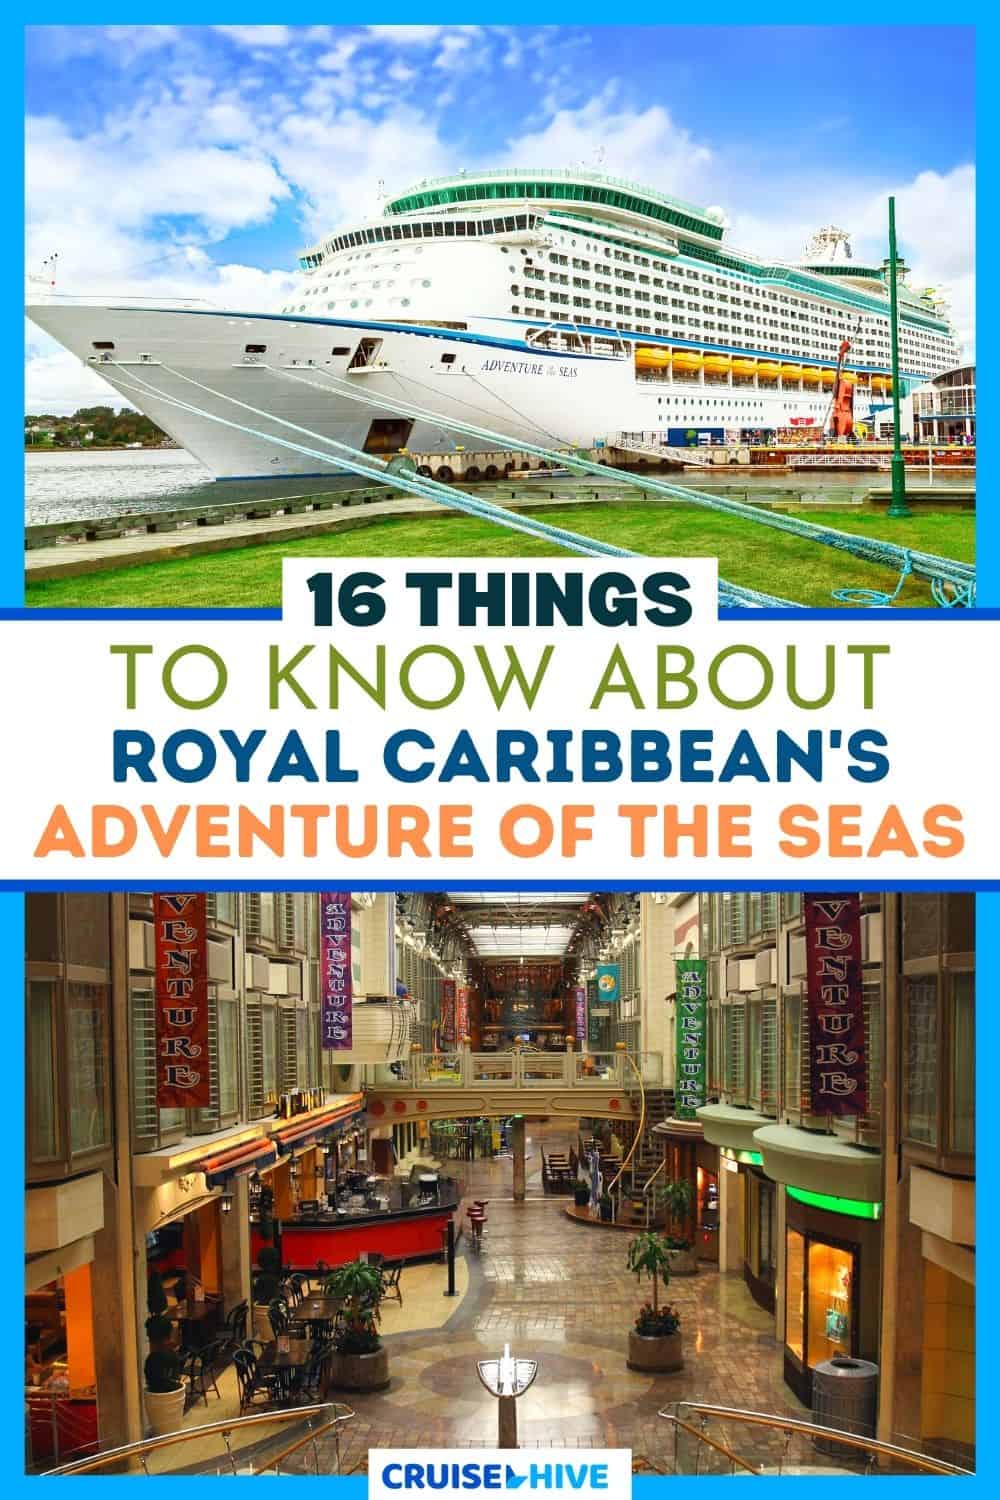 Royal Caribbean Adventure of the Seas